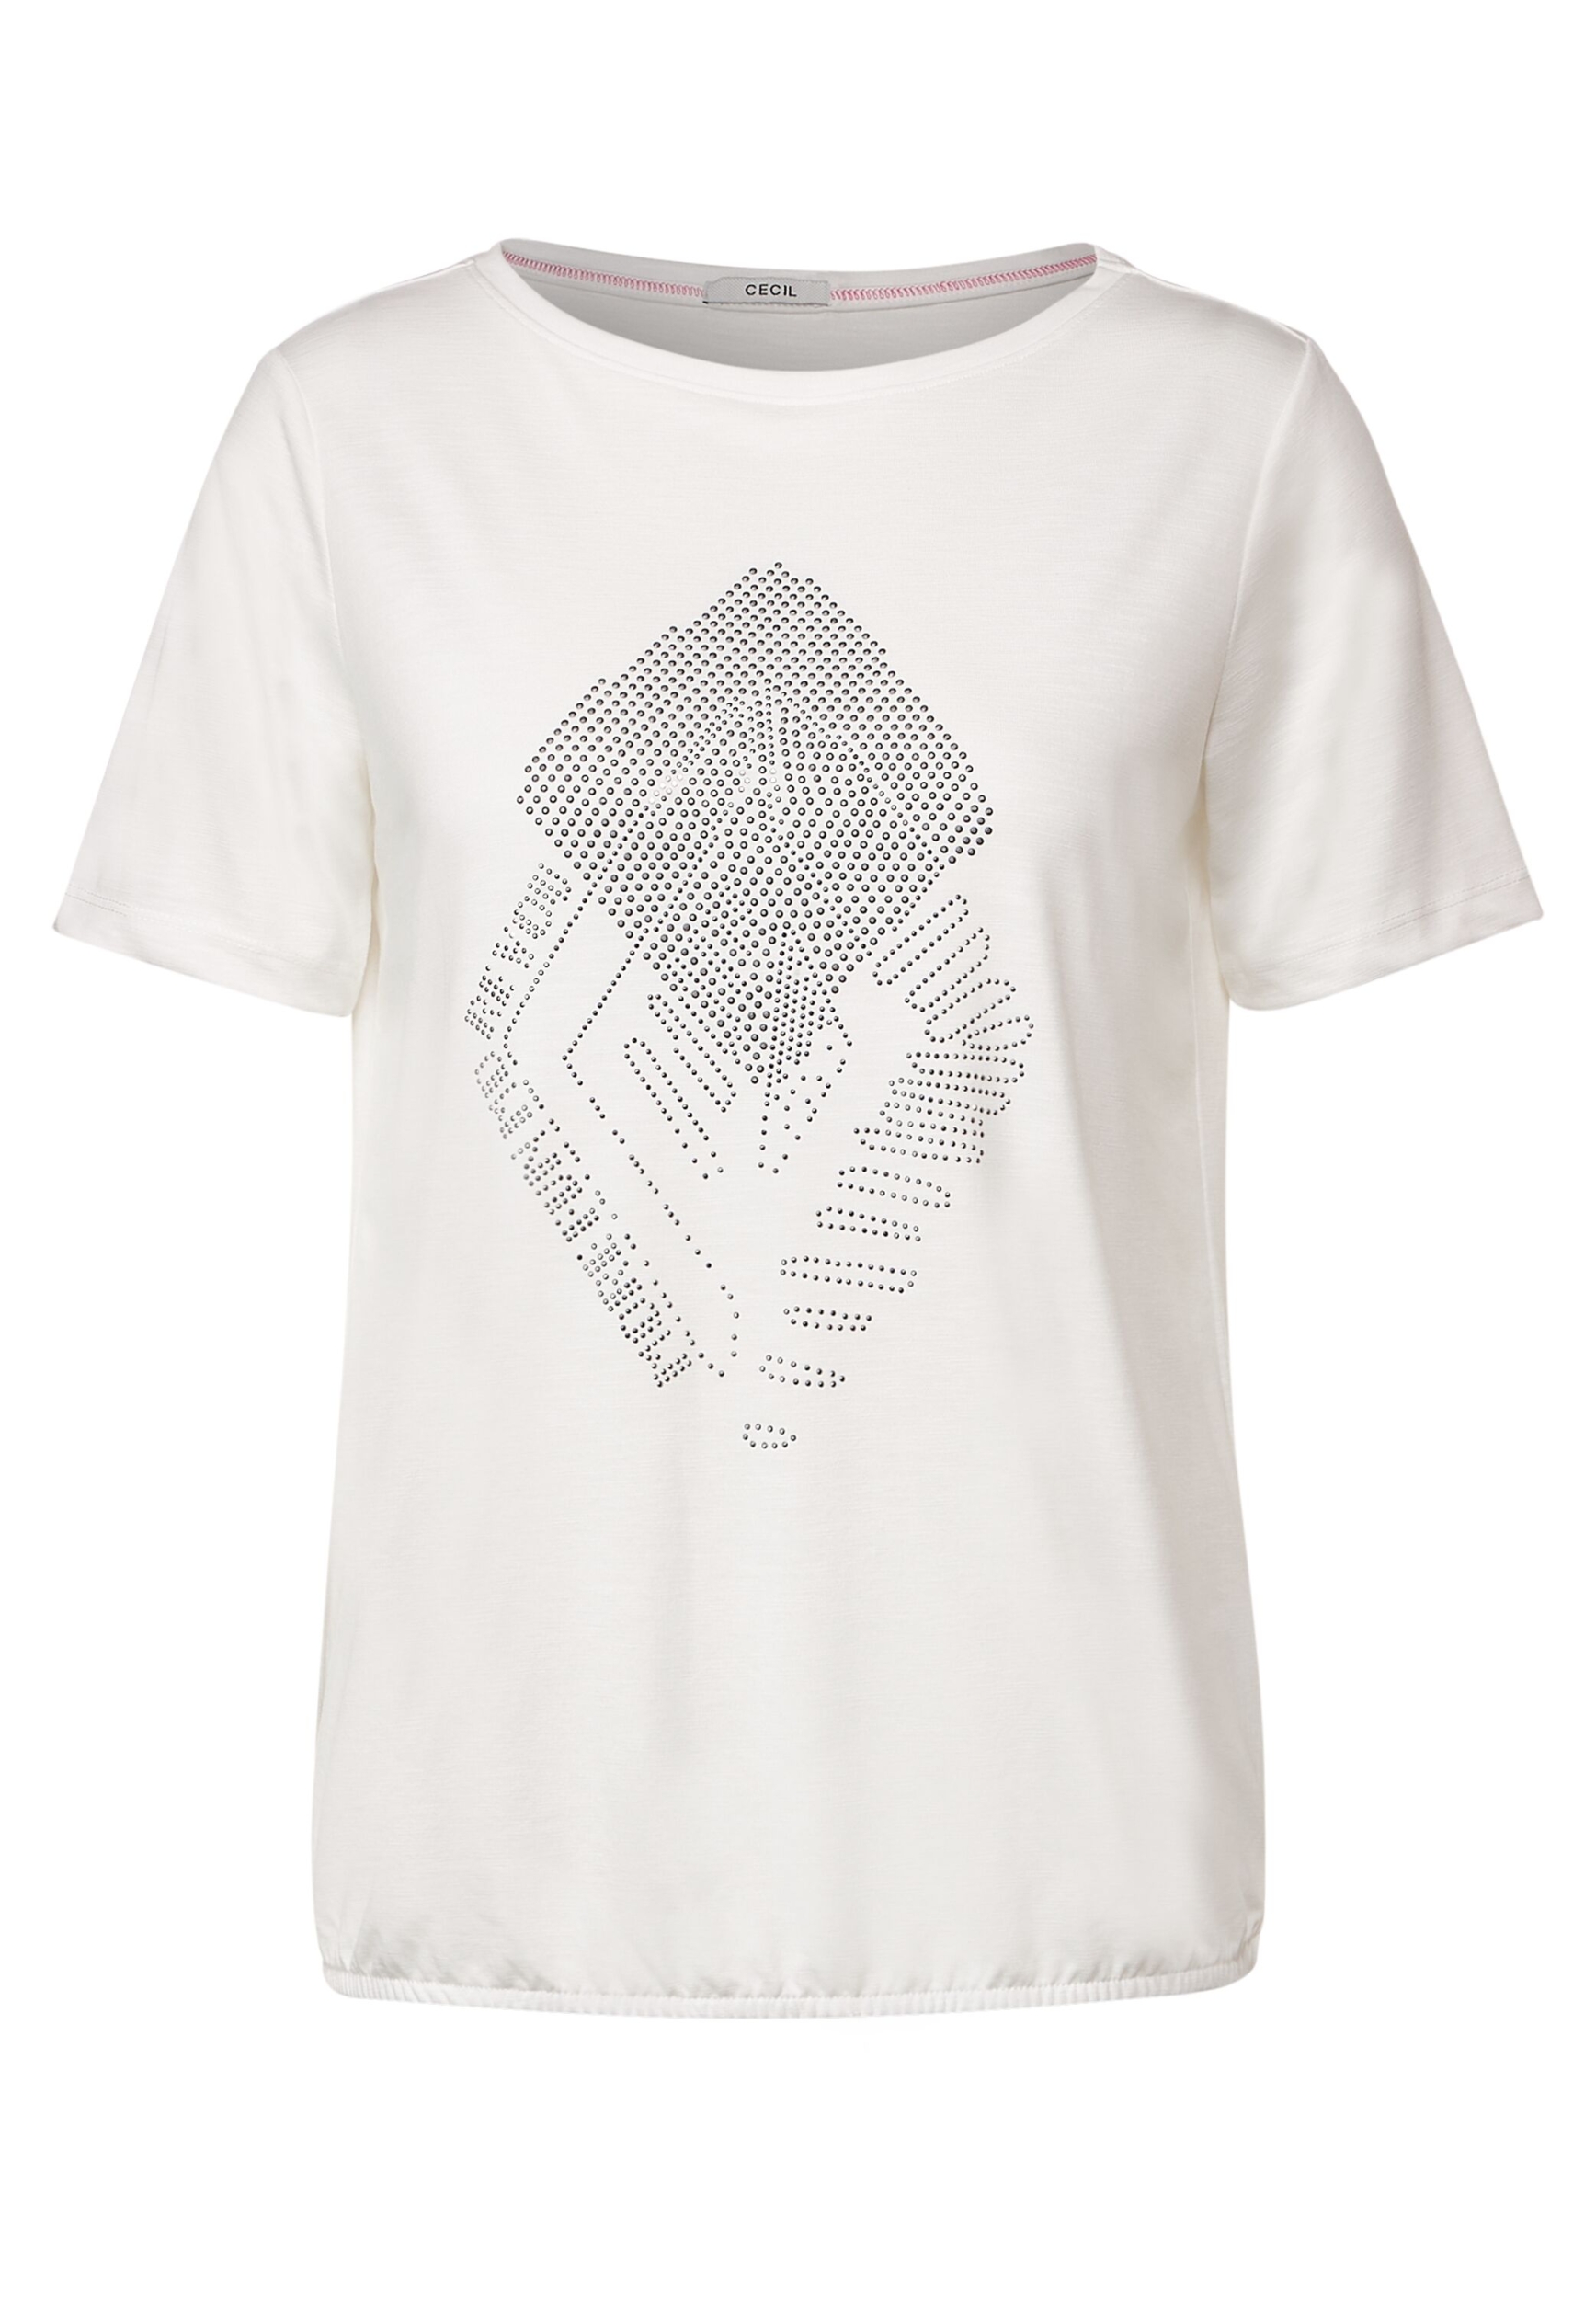 Hotfix FP Shirt | L | vanilla white | B320233-33474-L